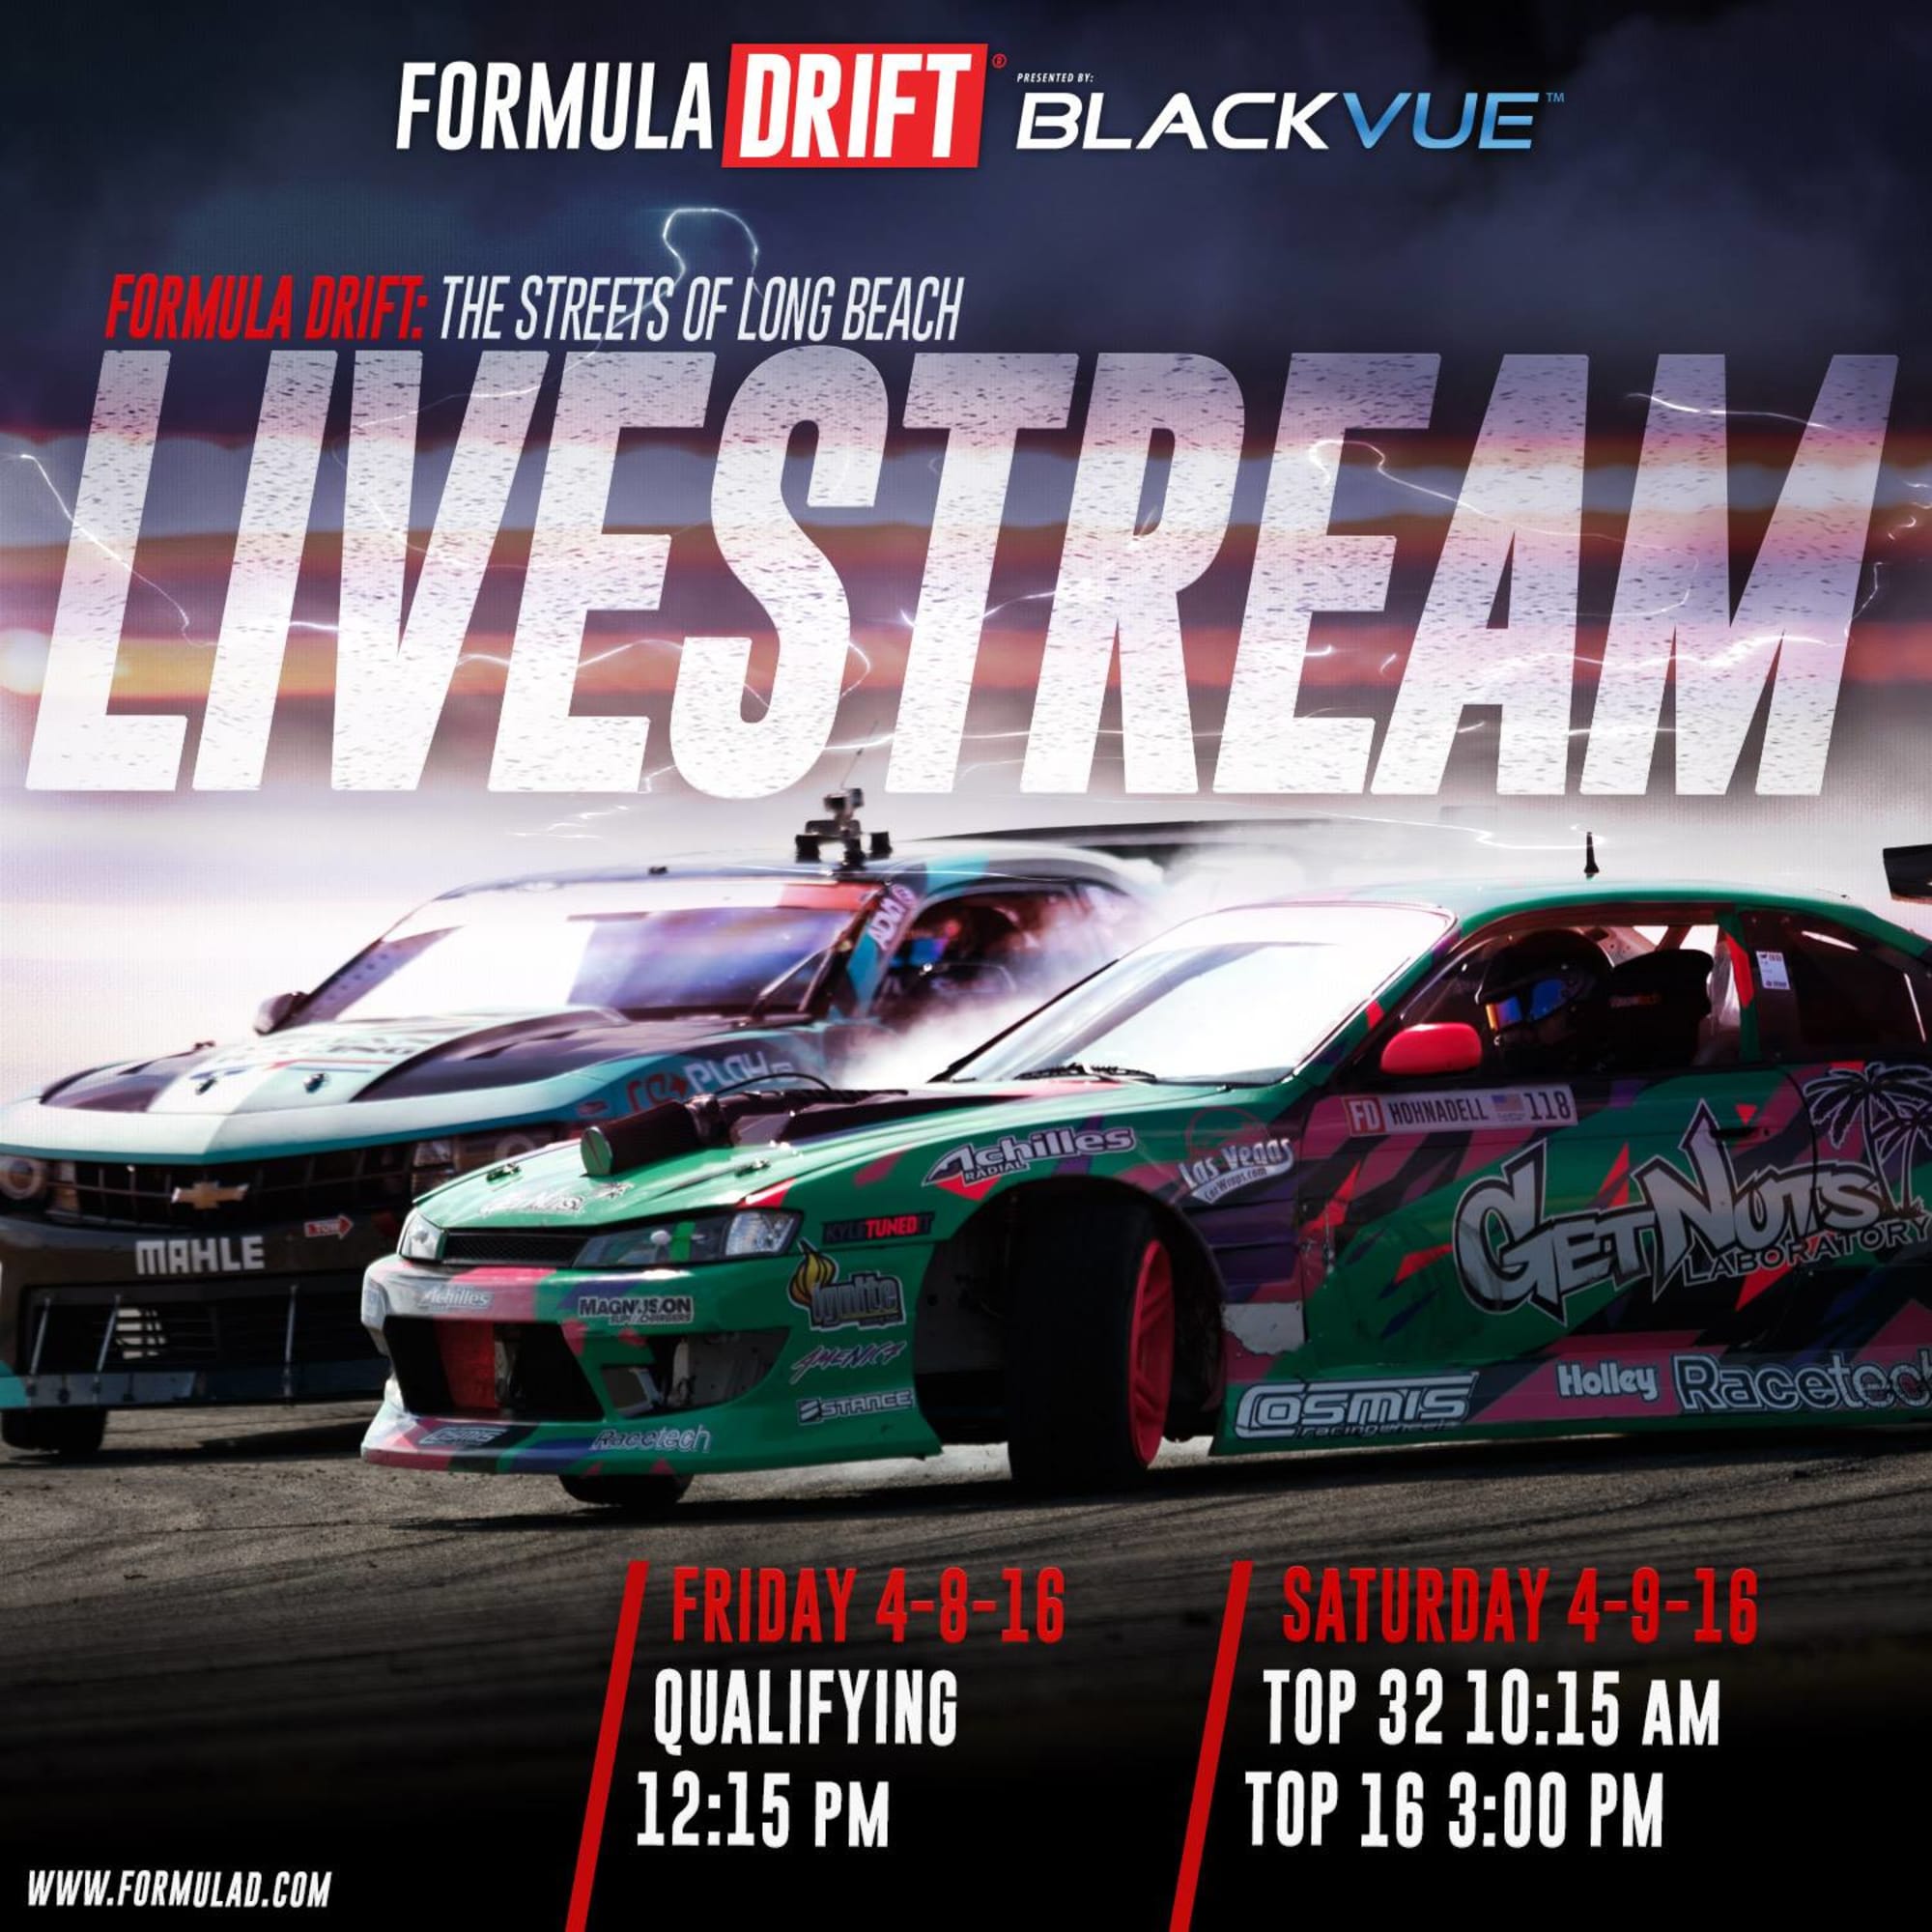 Formula Drift Round 1 Live Stream Link And Schedule